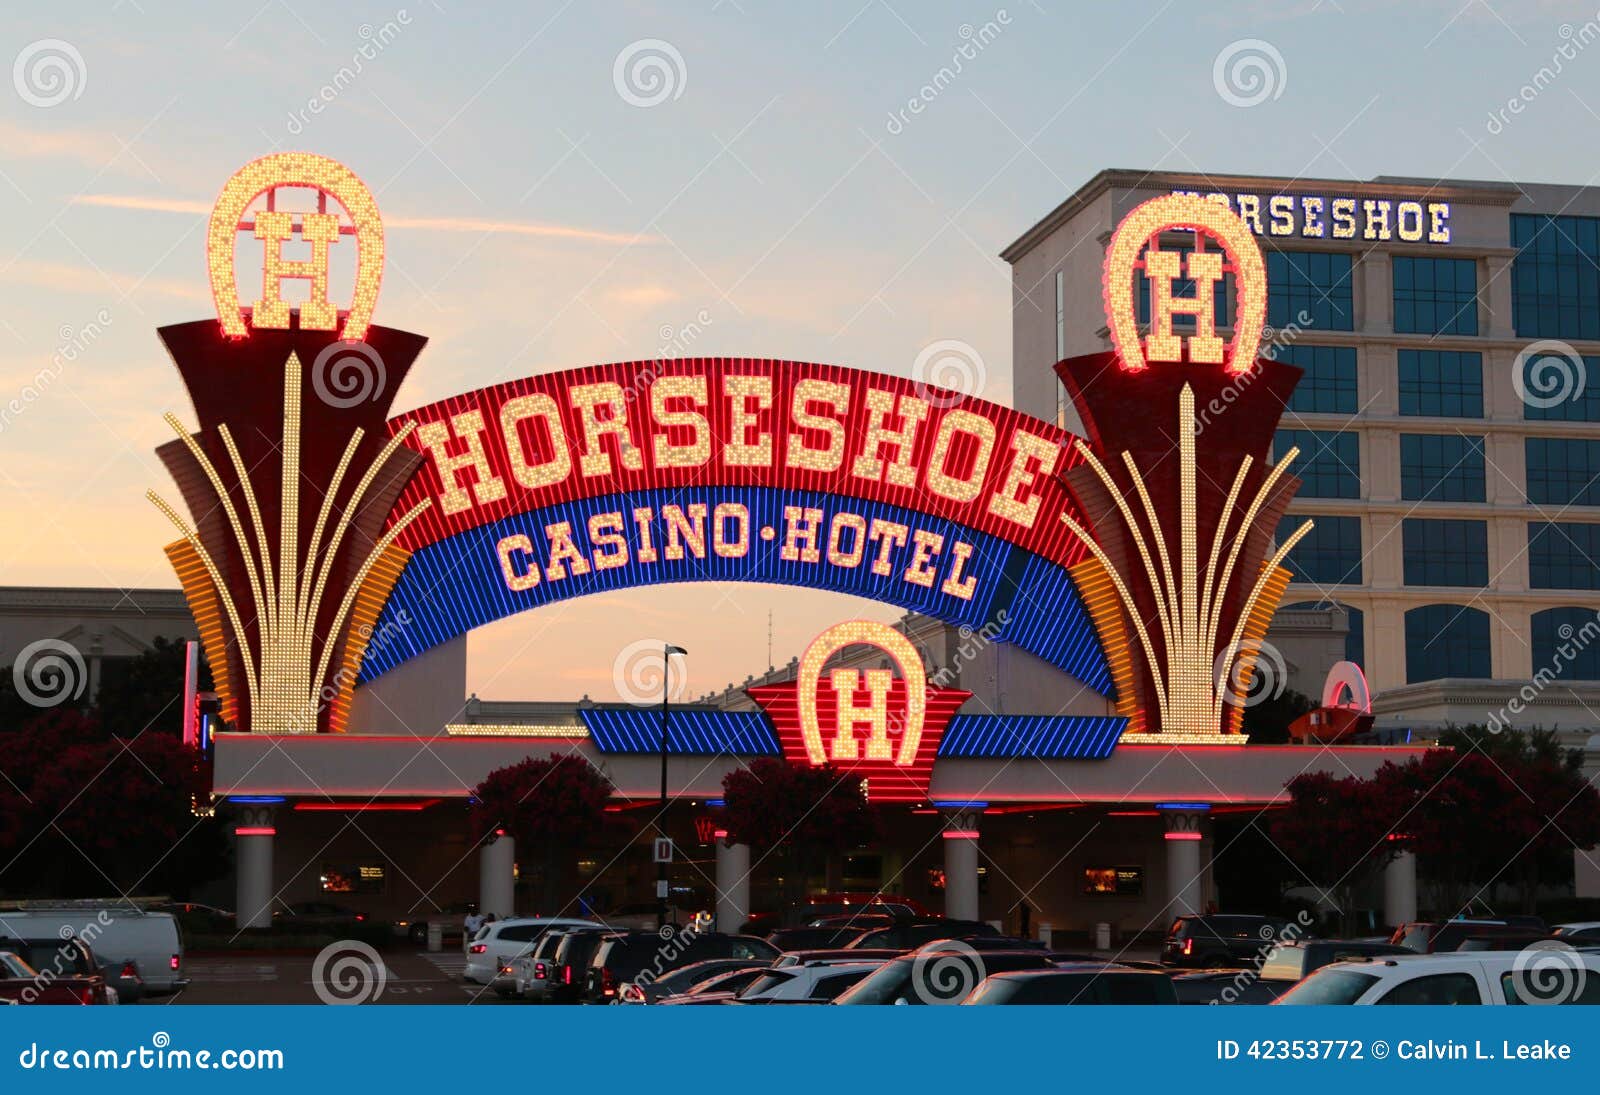 Tunica, Mississippi, Horseshoe Casino